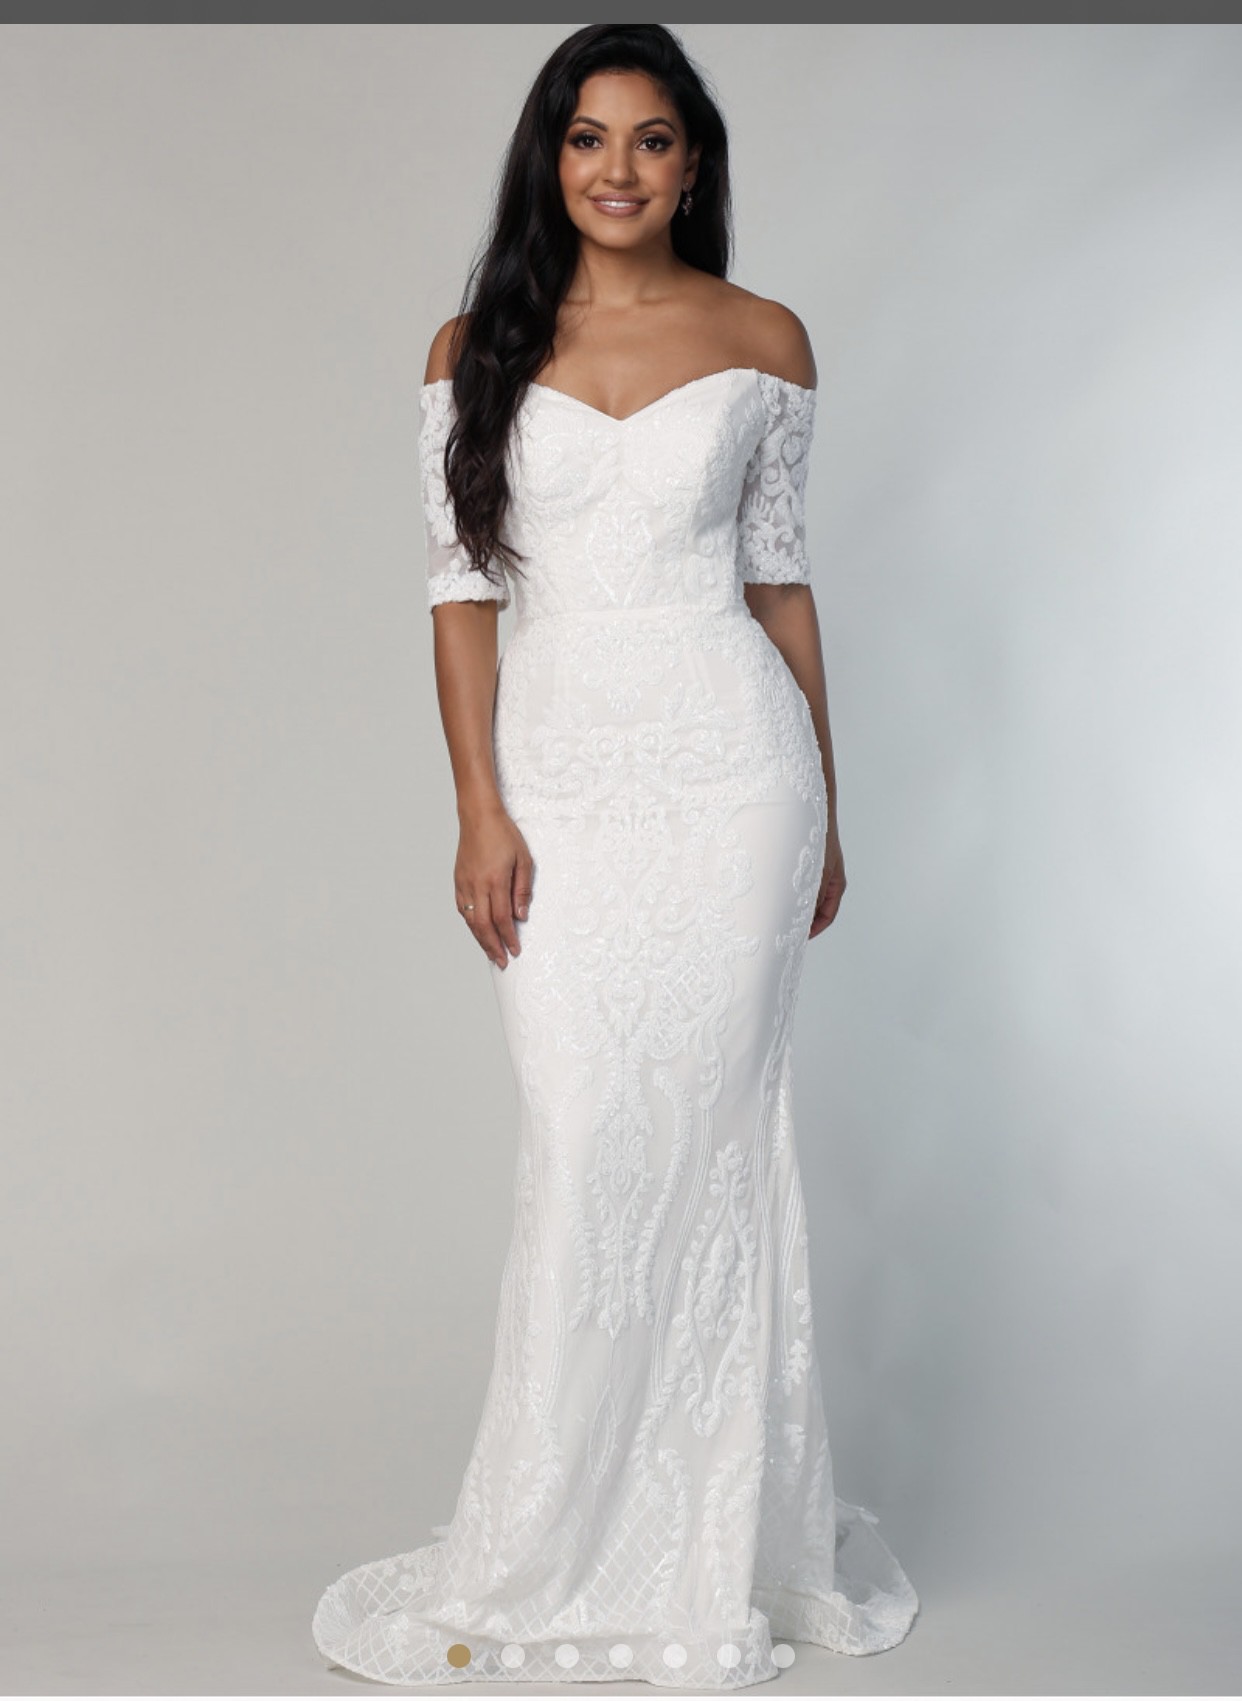 Tina Holly Couture New Wedding Dress Save 60% - Stillwhite